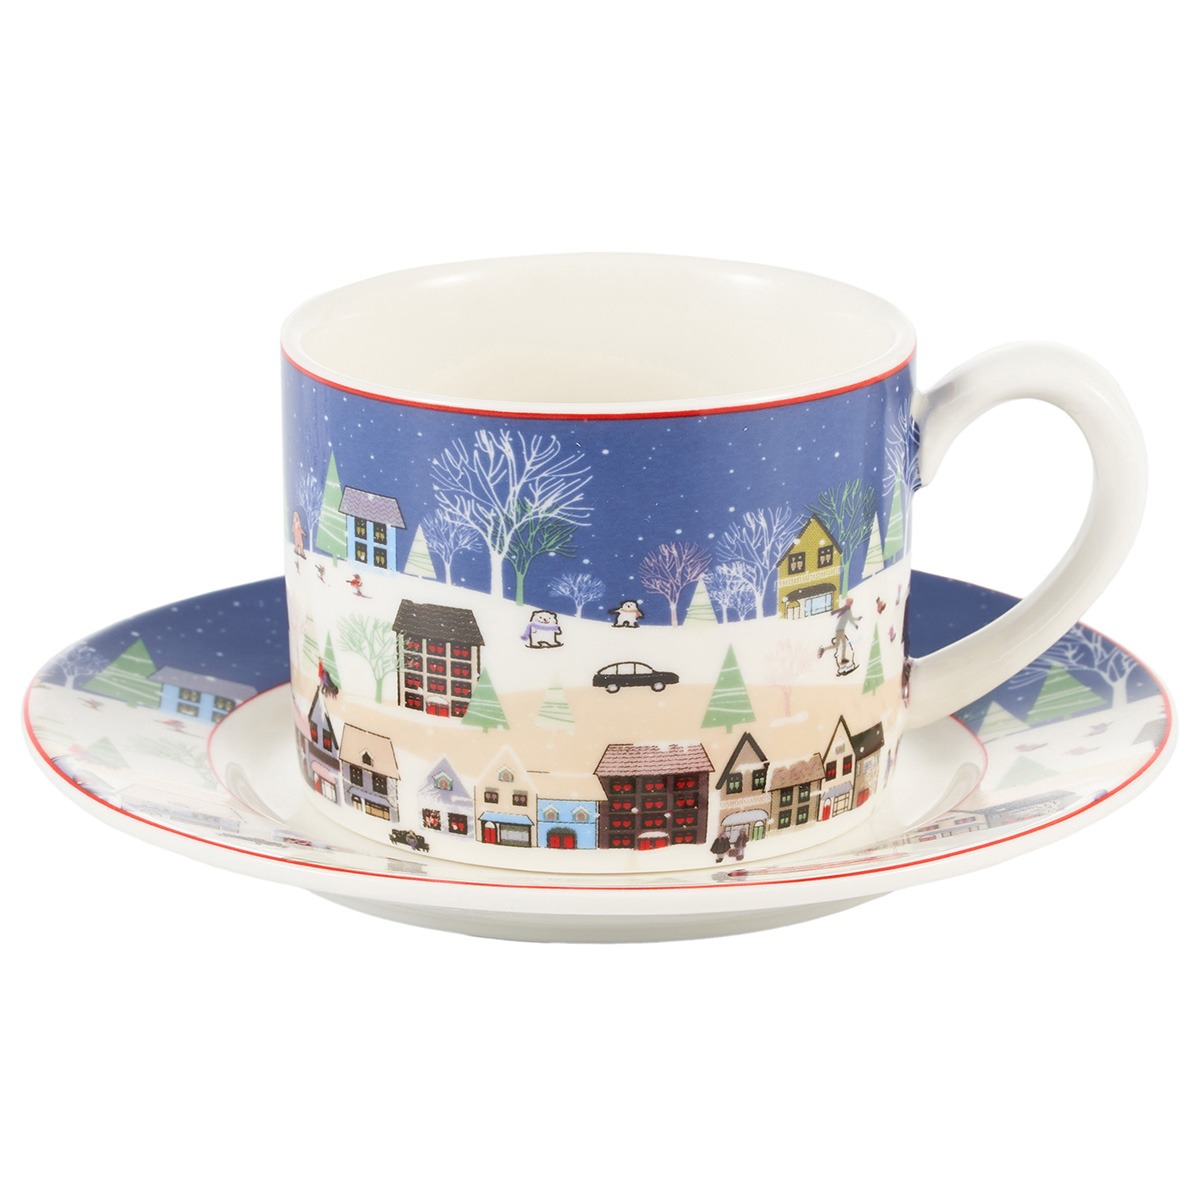 Чайная пара Gipfel Christmas фарфор синий чашка 250 мл, блюдце 14 см пара чайная чашка блюдце 240 мл tudor tu9999 3